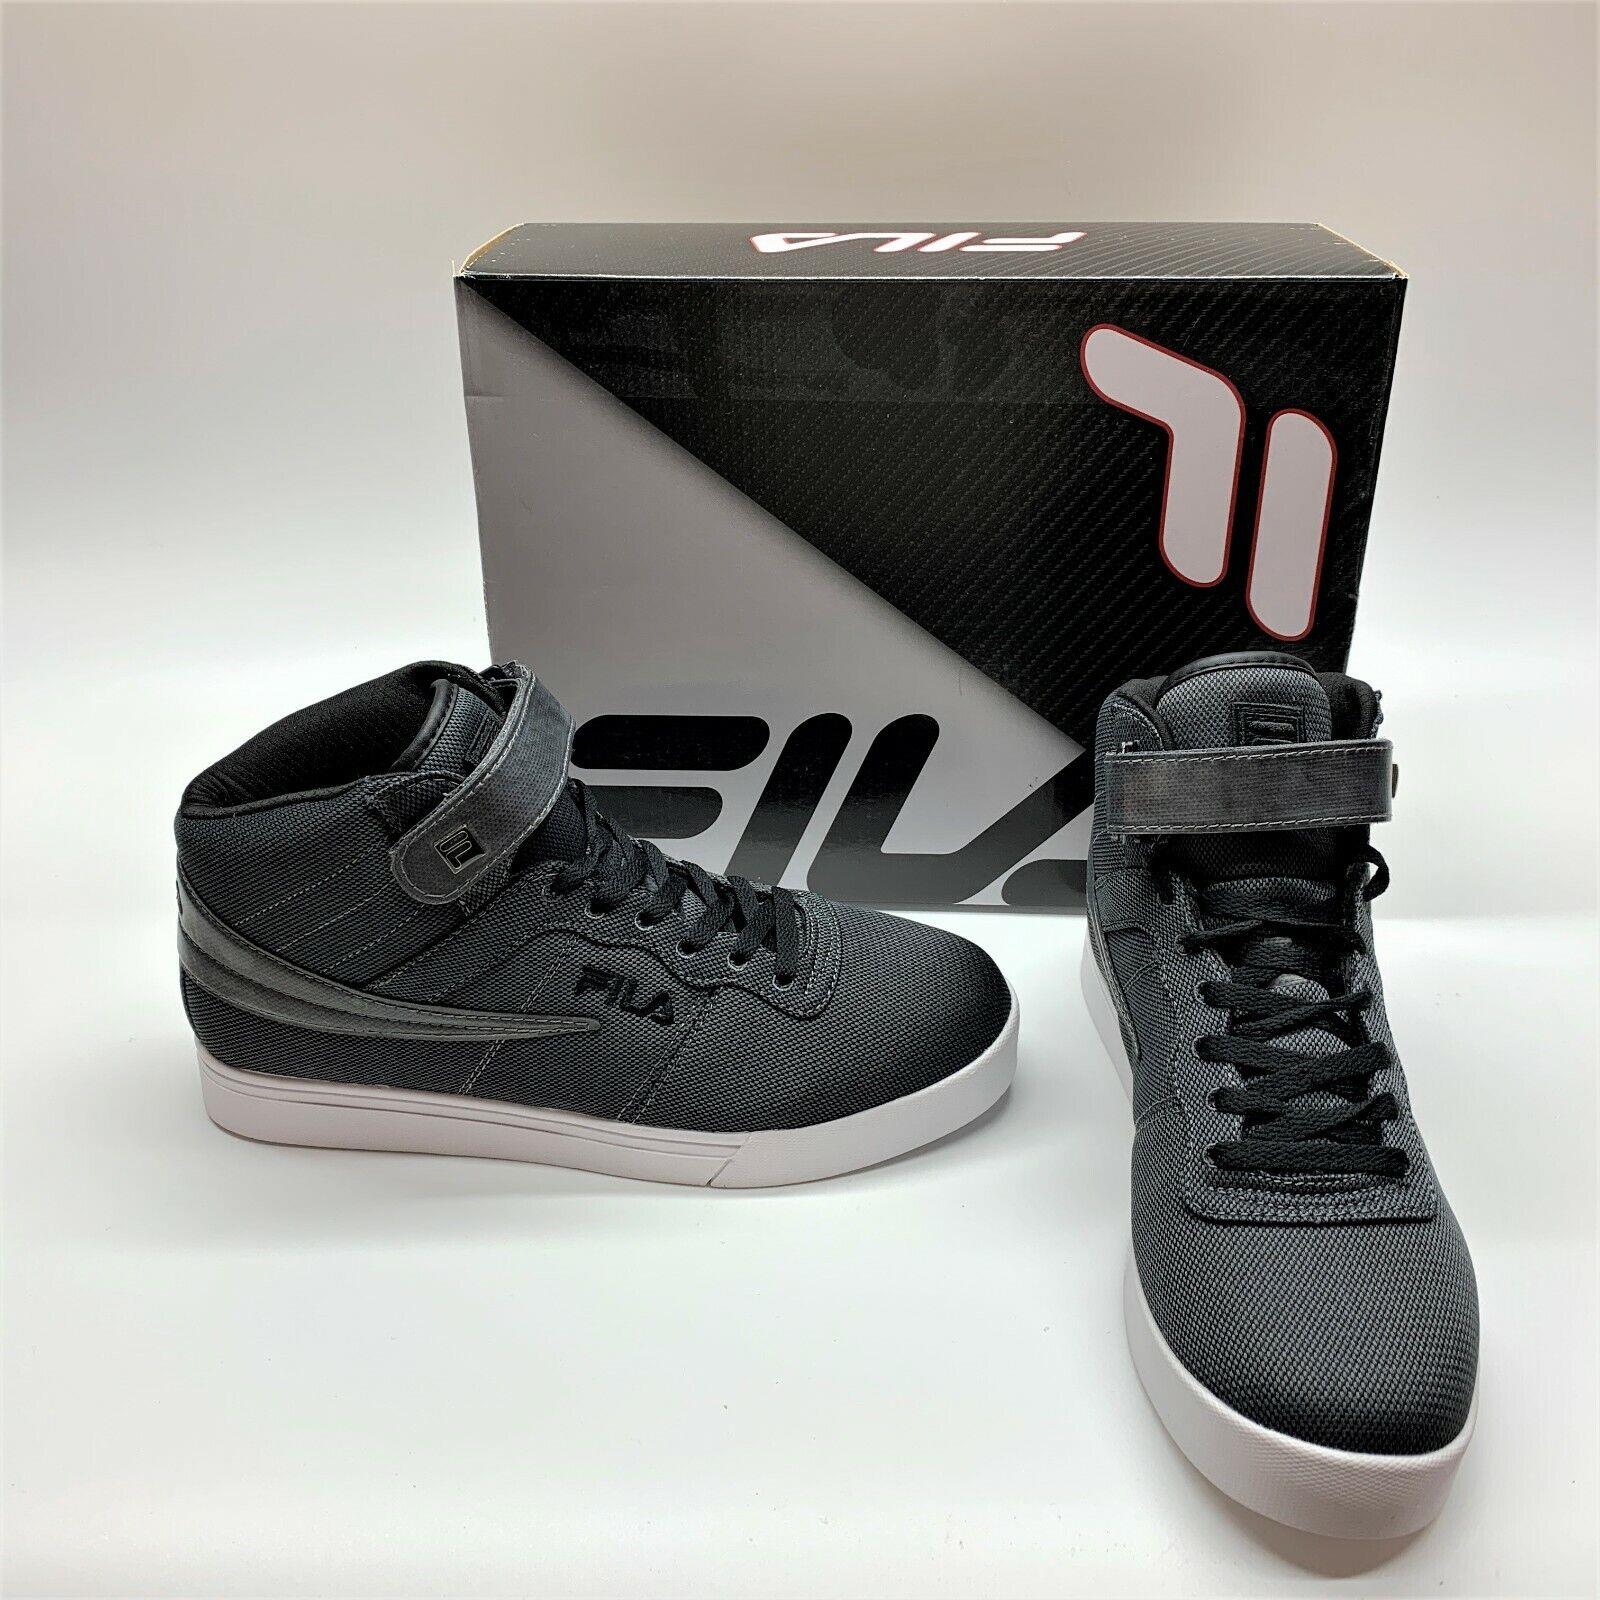 Fila Vulc 13 MP Mid Plus Woven 1CM00072 Black White Sneakers Shoes Mens 10